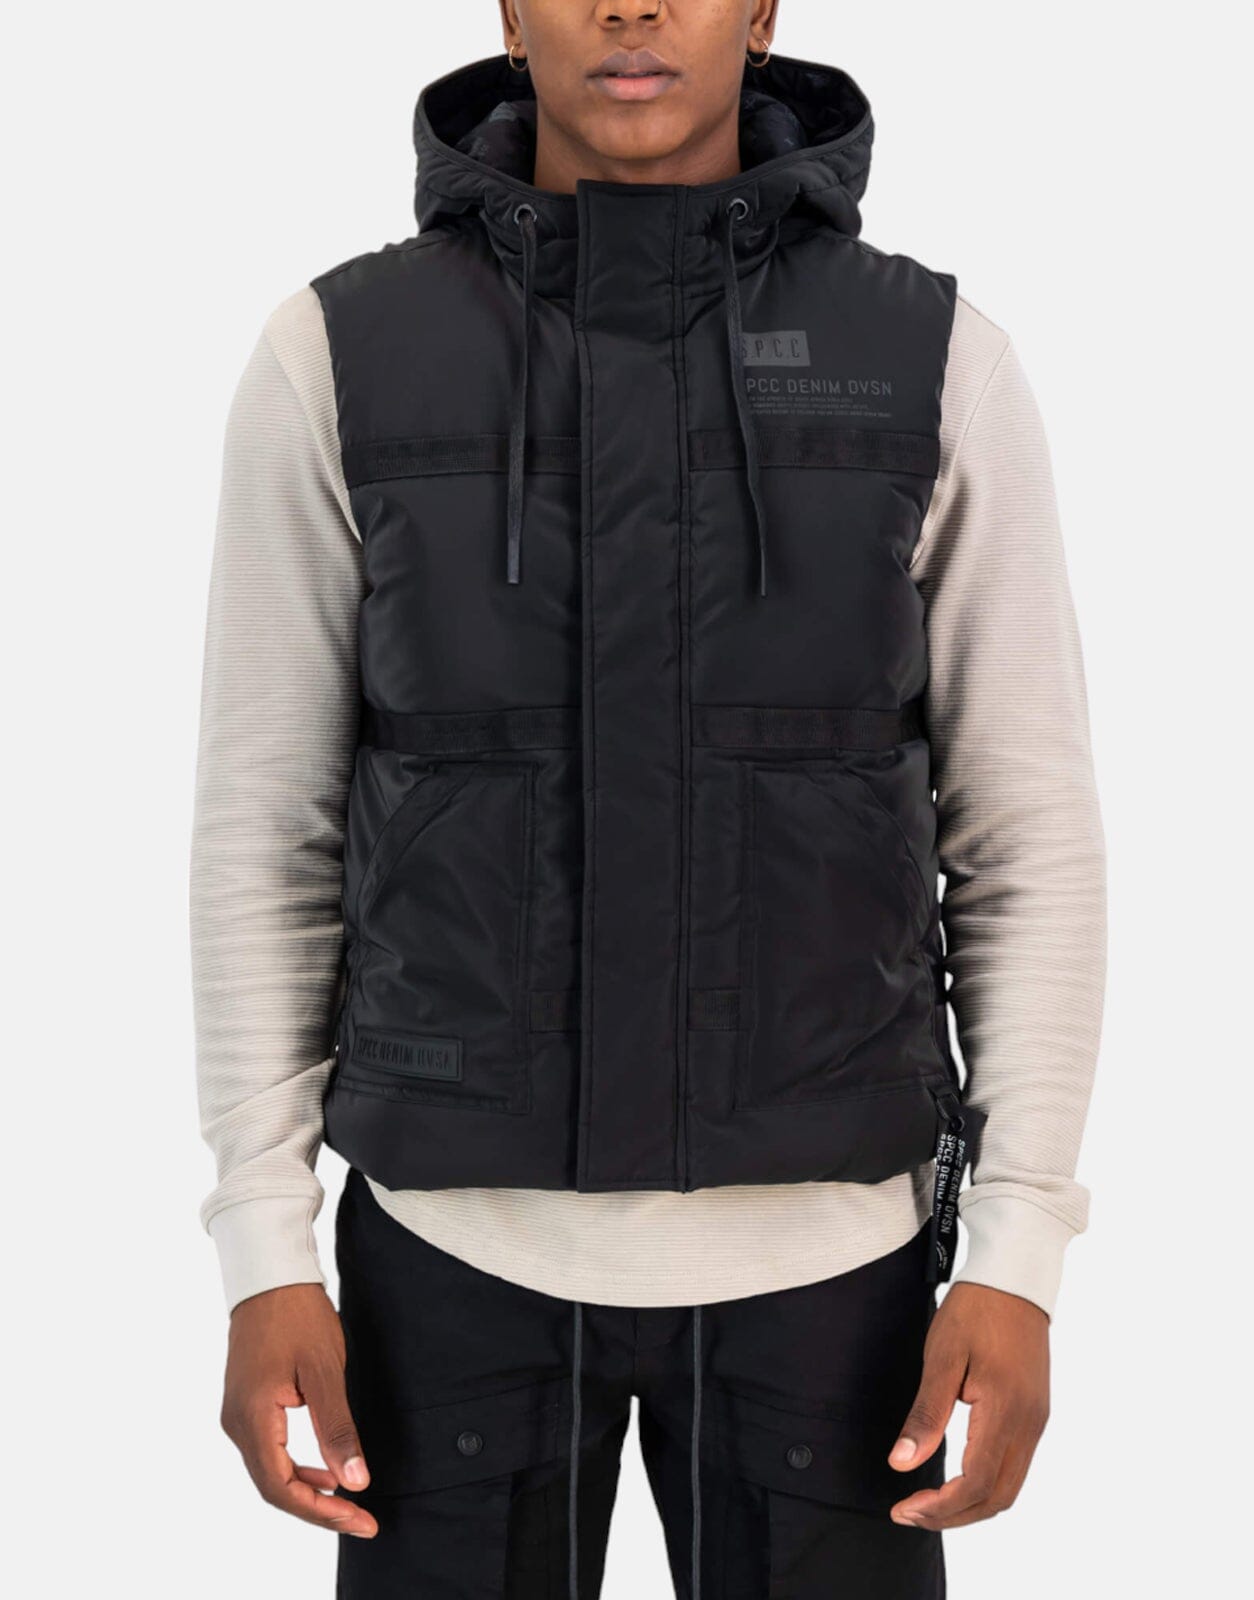 SPCC Minola Black Jacket - Subwear